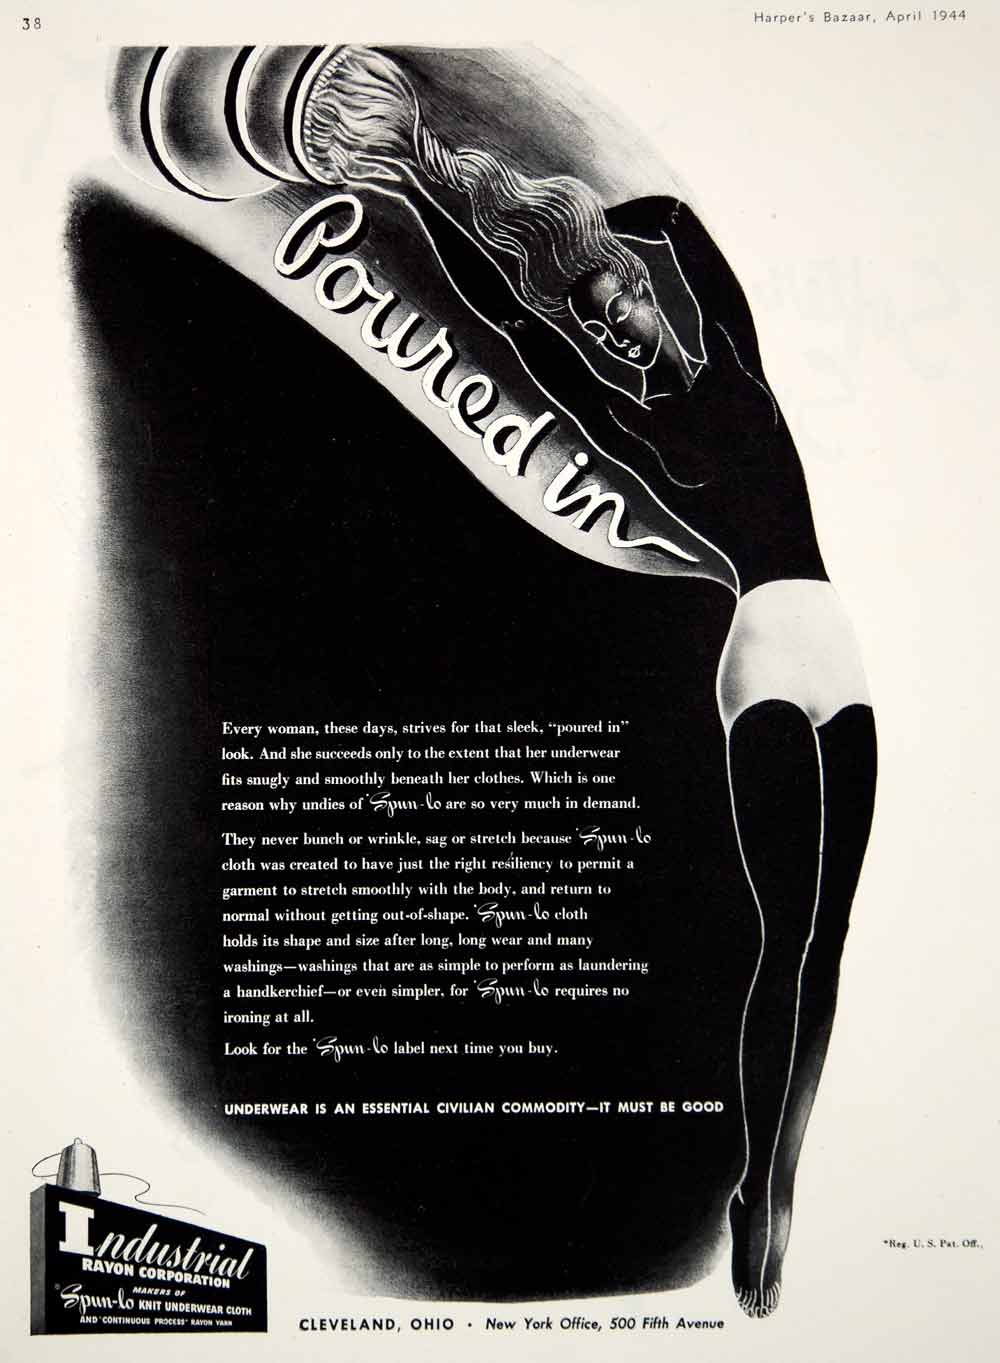 Exquisite Bra Advert, 1950s : Art Print £7.99 / Framed Print £22.99 /  T-Shirt £12.99 / Shopping Bag £8.99